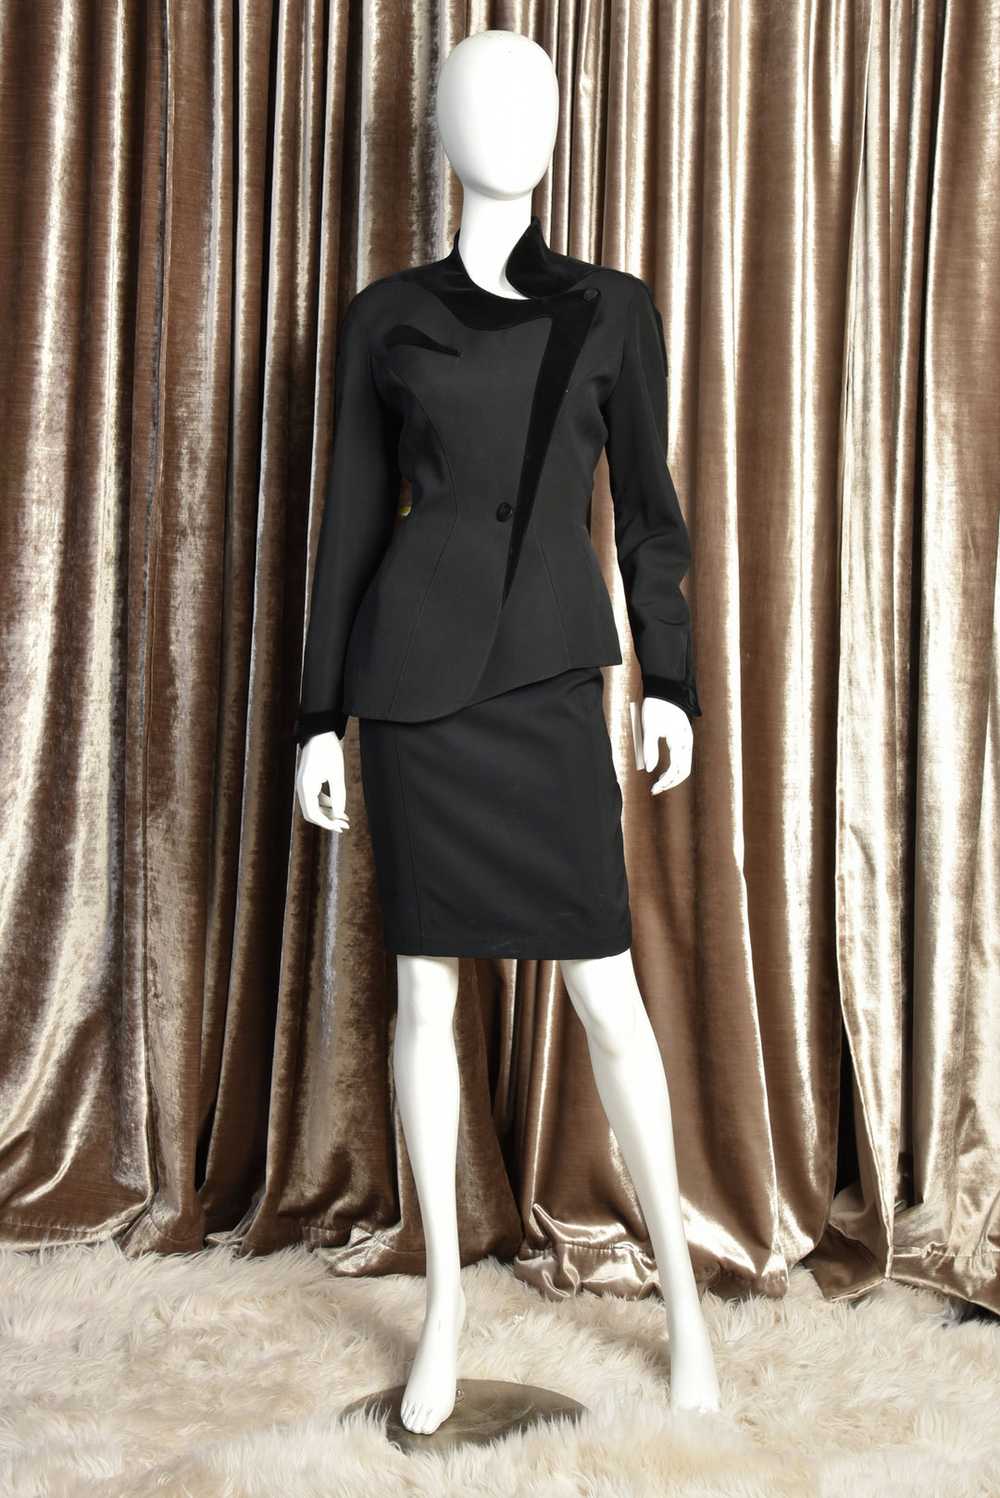 Thierry Mugler 80s Sculptural Skirt Suit - image 3